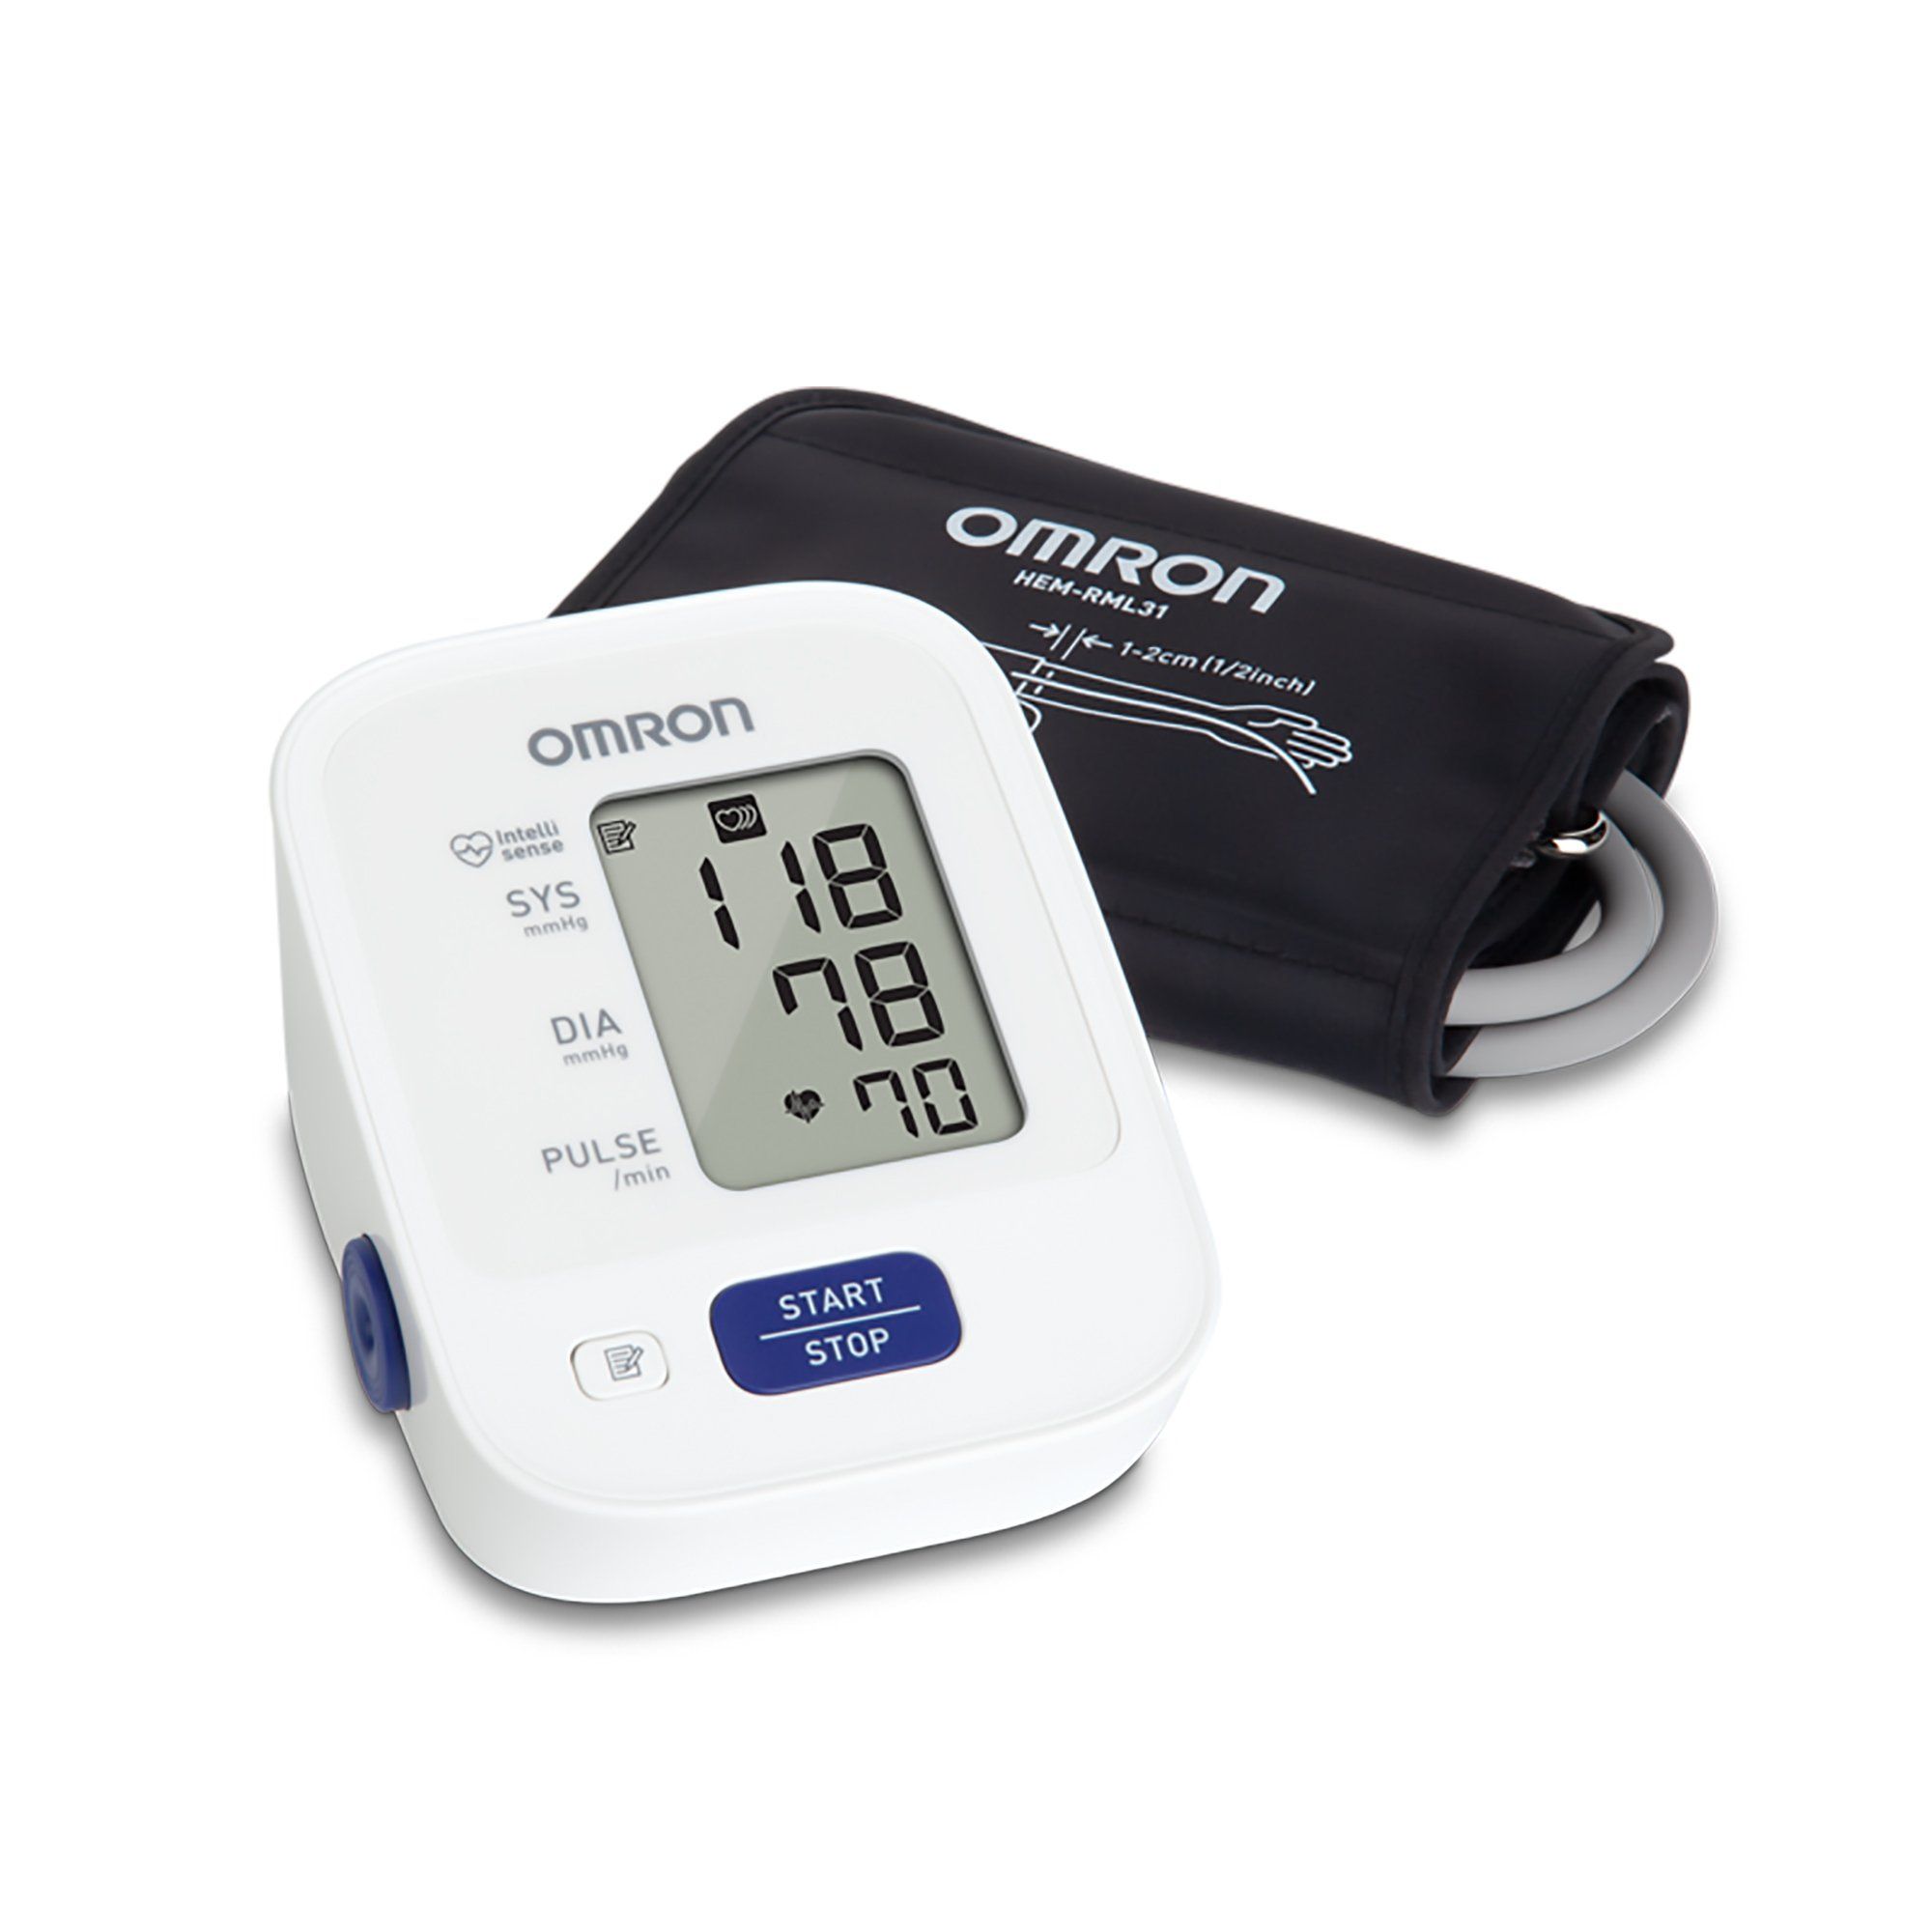 Omron 3 Series Automatic Digital Upper Arm Blood Pressure Monitor - Black